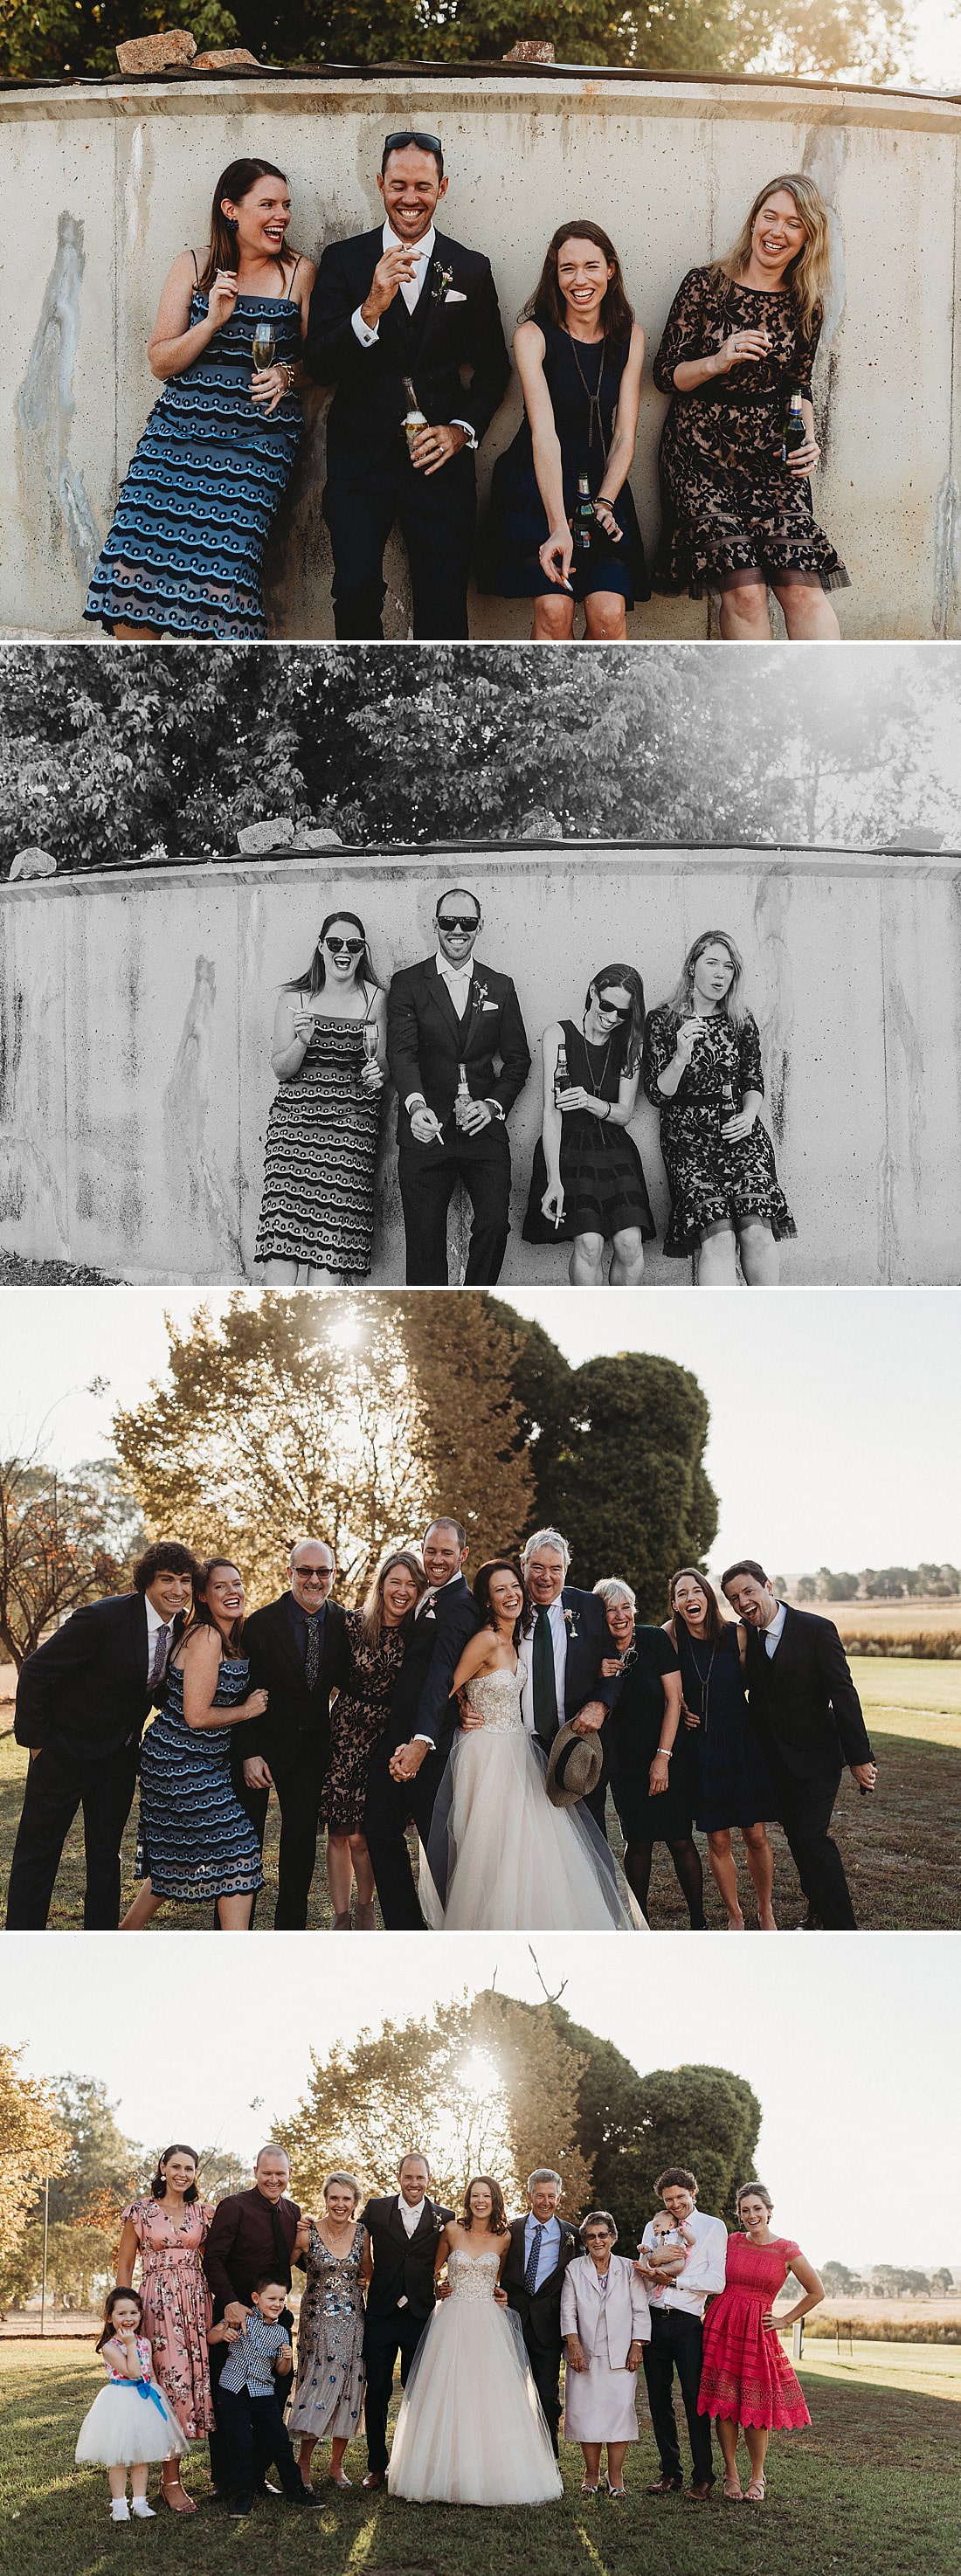 Family-wedding-photos-sydney